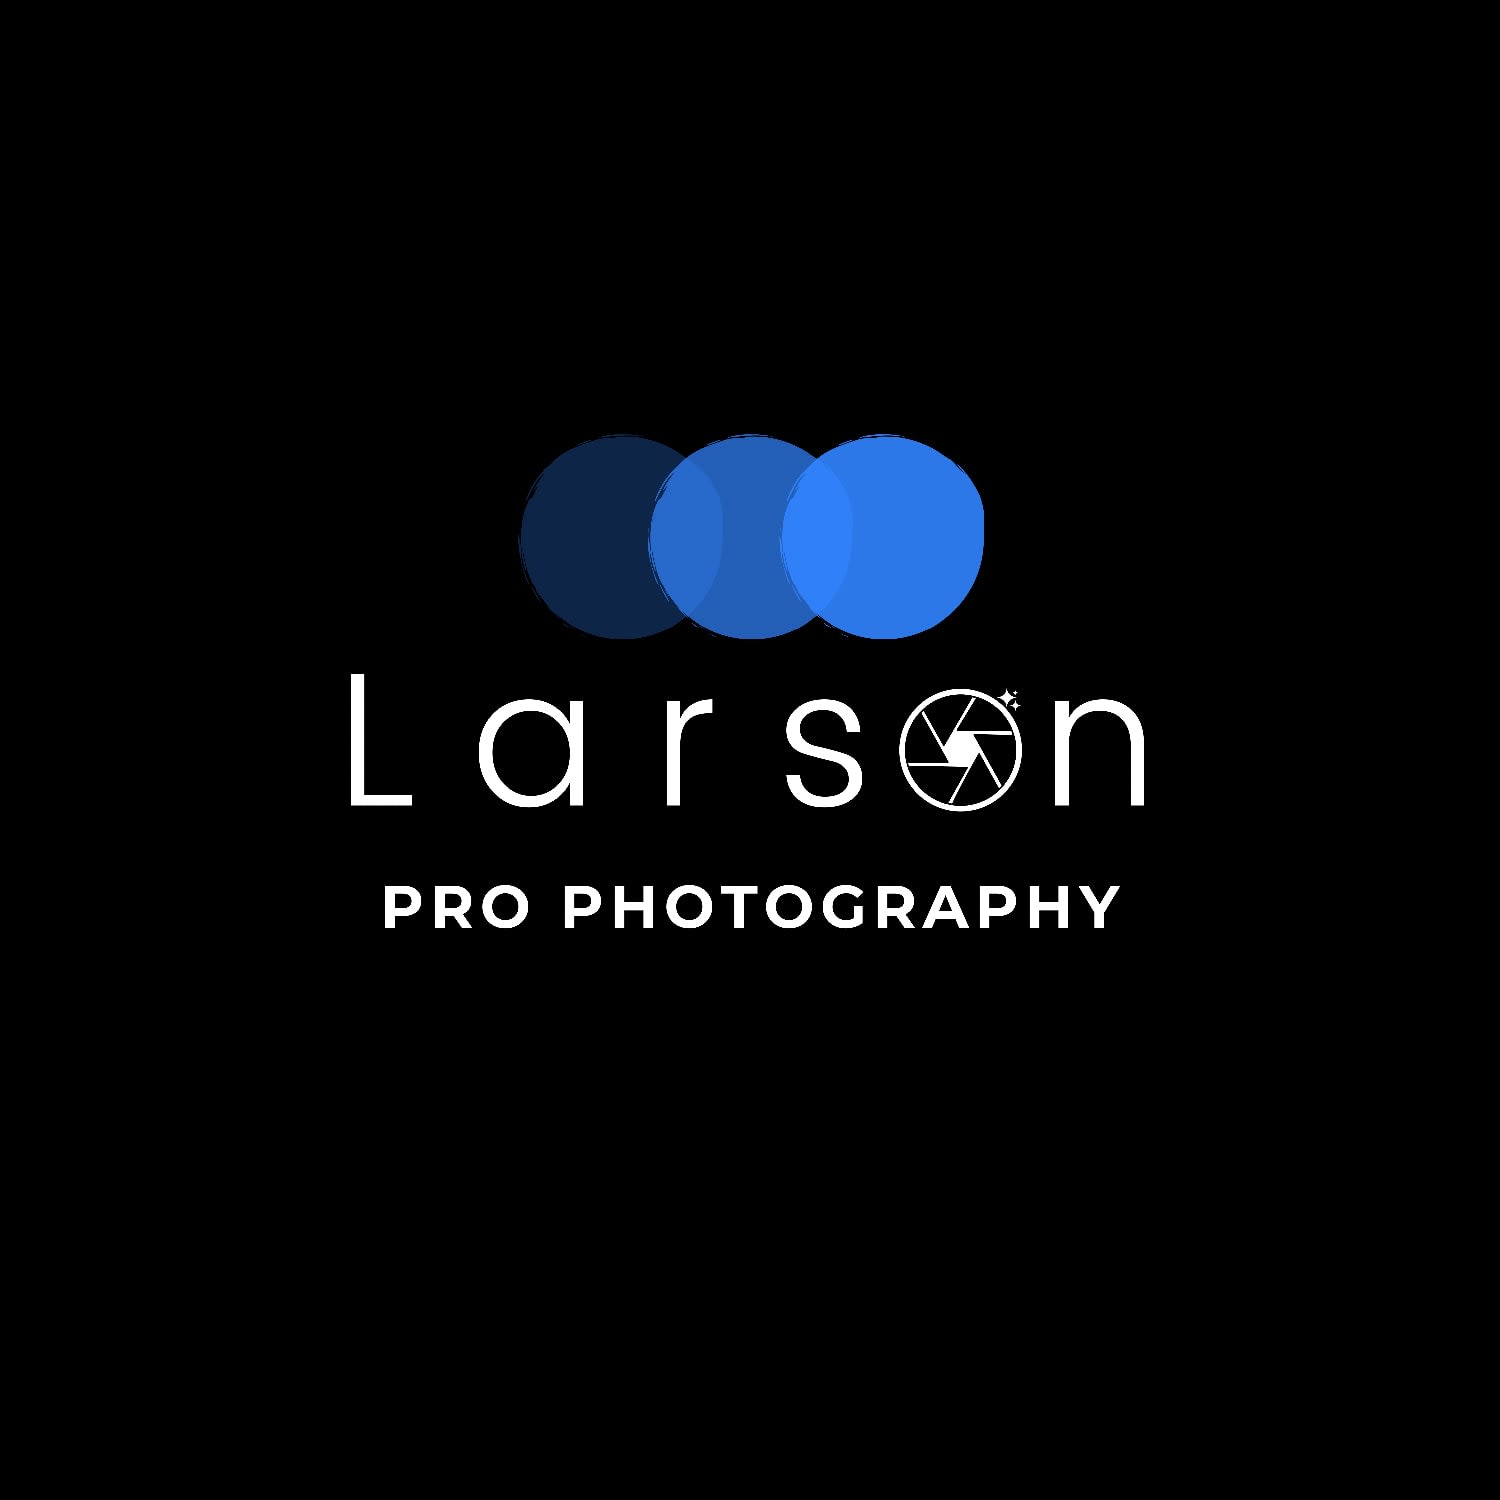 Larson Pro Photography